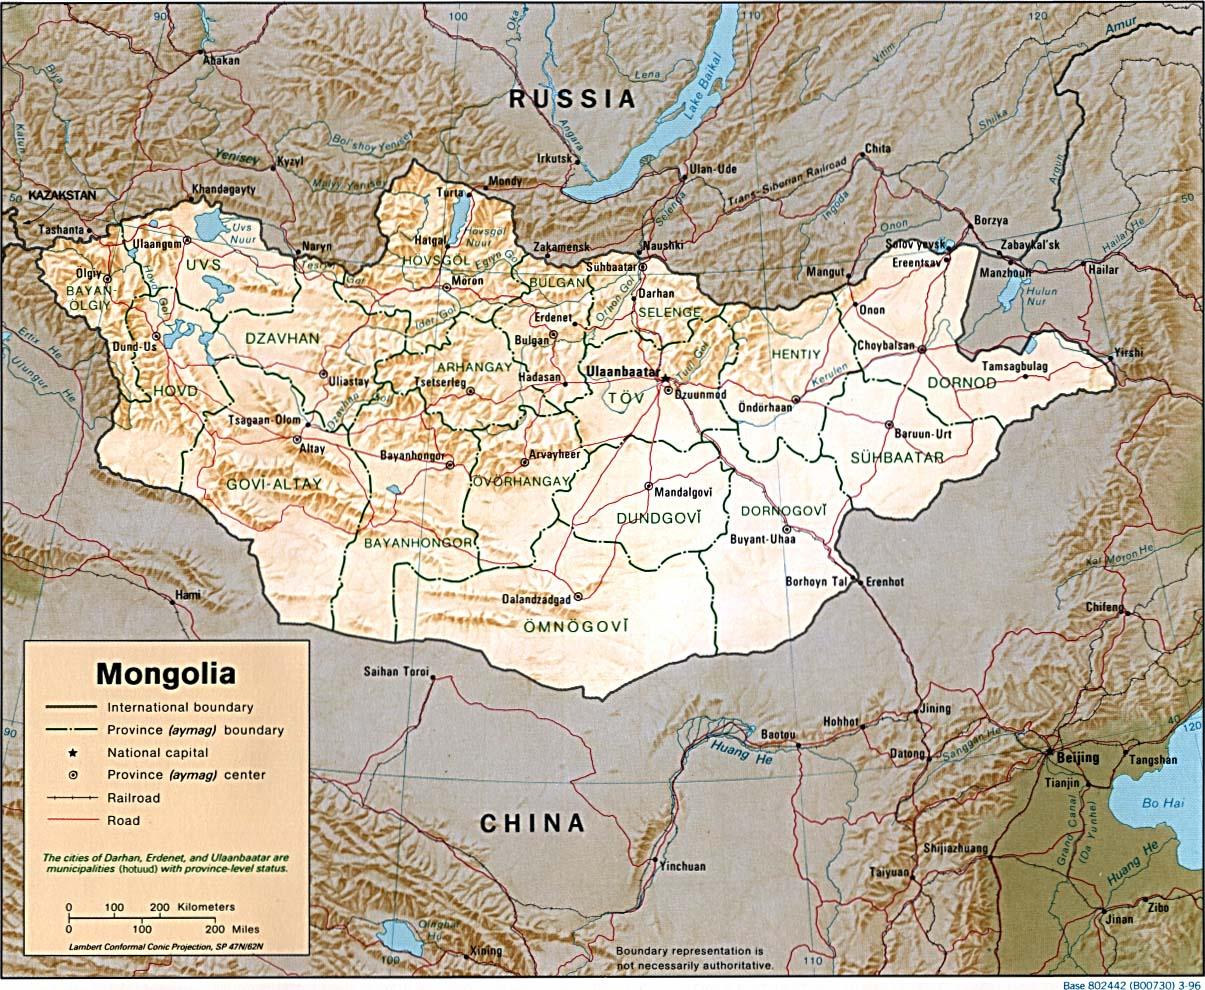 Mongoliet geografi karta - Mongoliet geografisk karta (Östra asien - Asien)